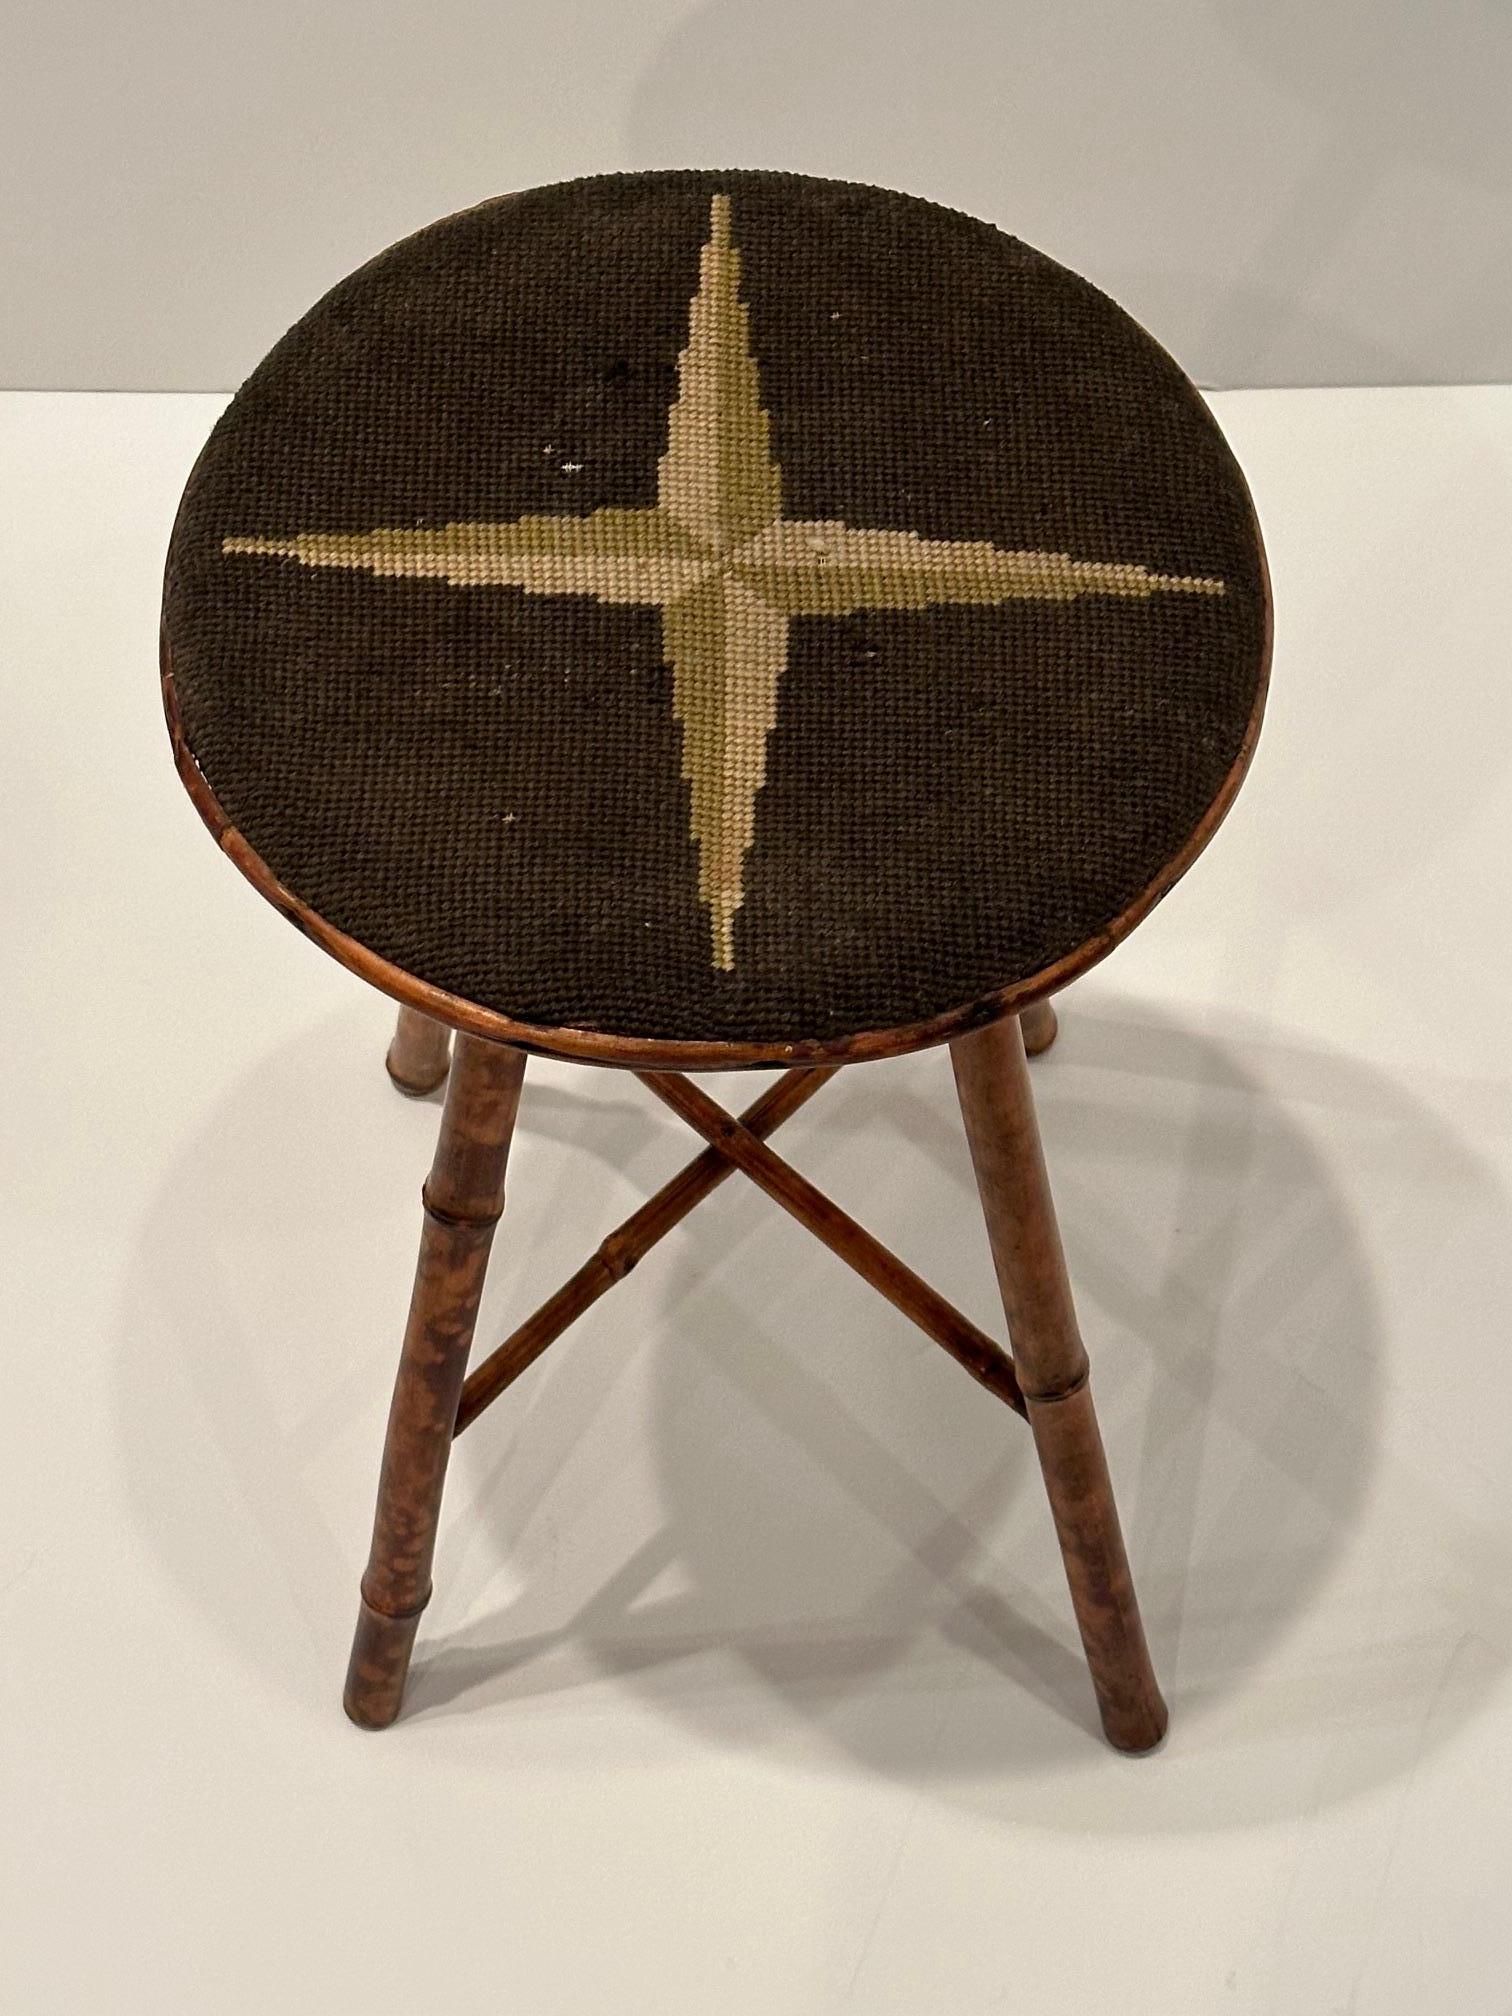 Classic American vintage bamboo stool having original needlepoint seat.